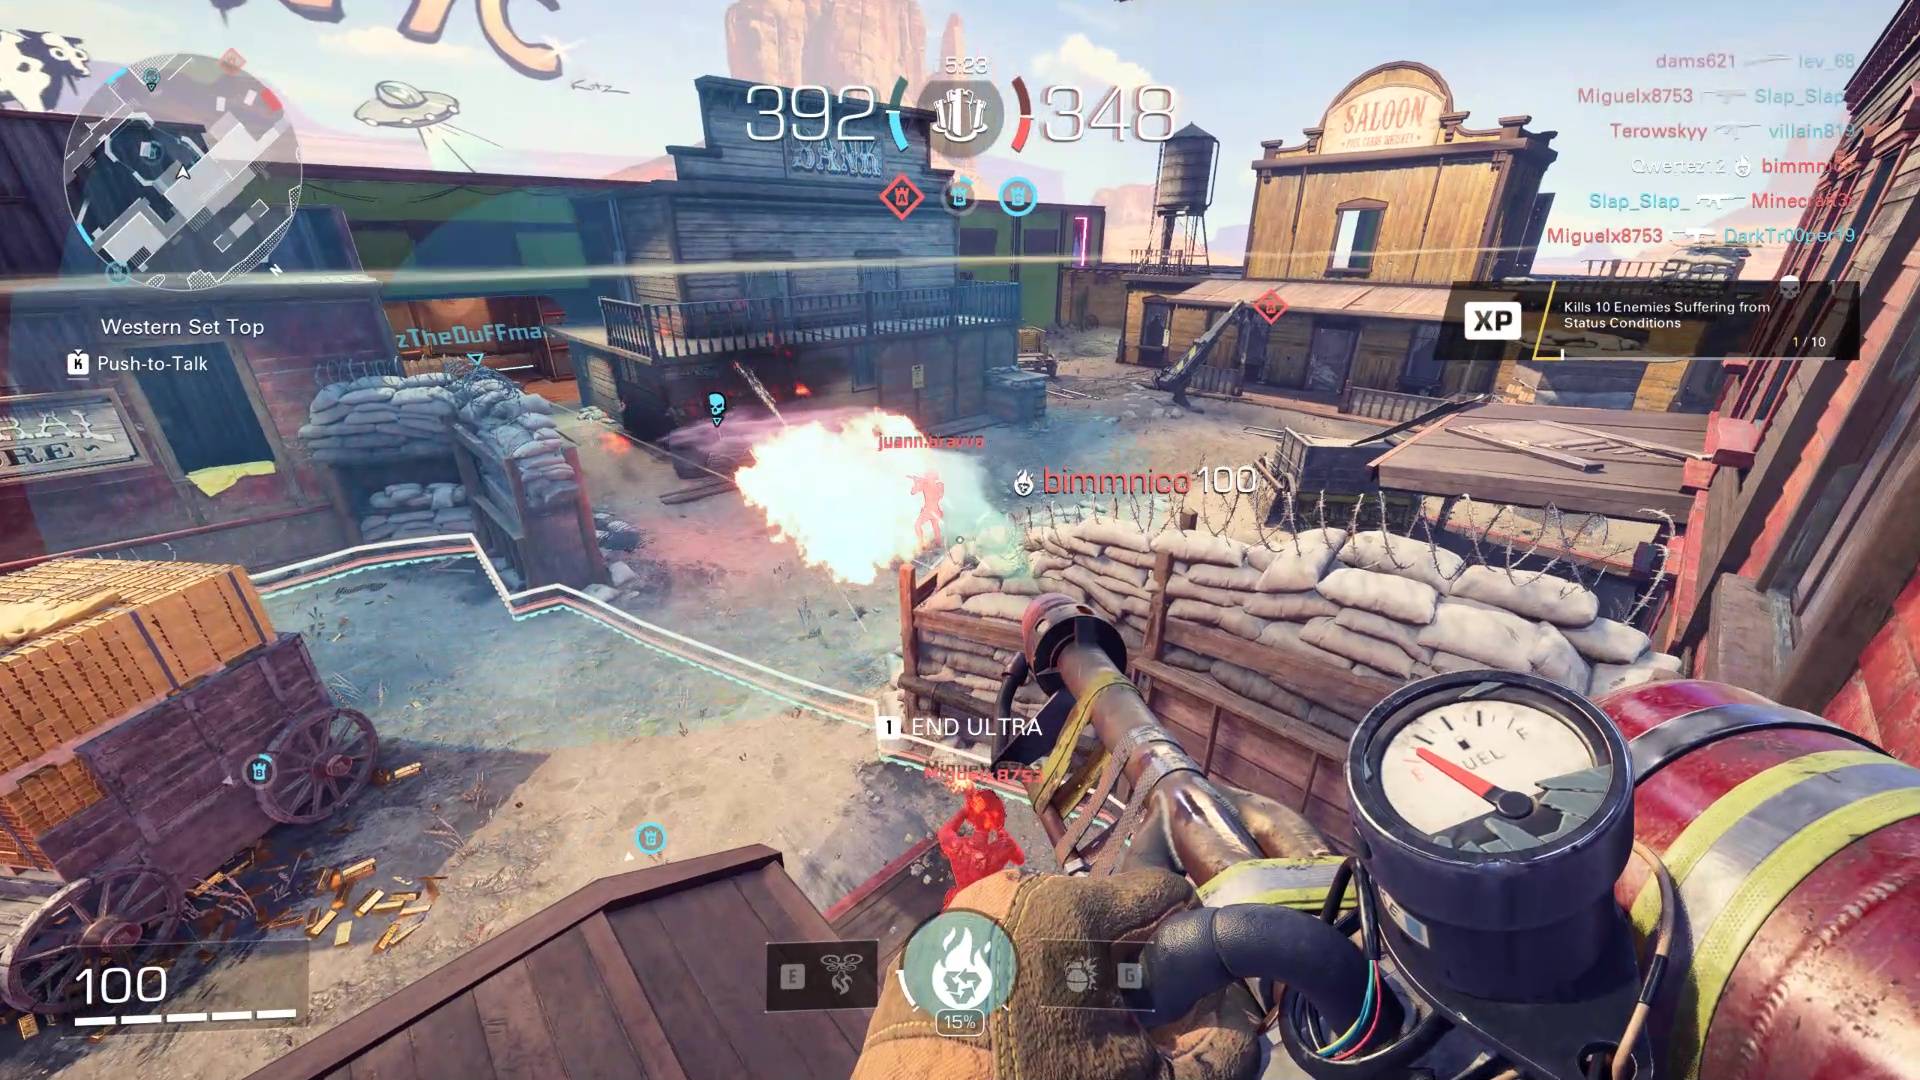 Capture d'écran de gameplay de XDefiant montrant une fusillade